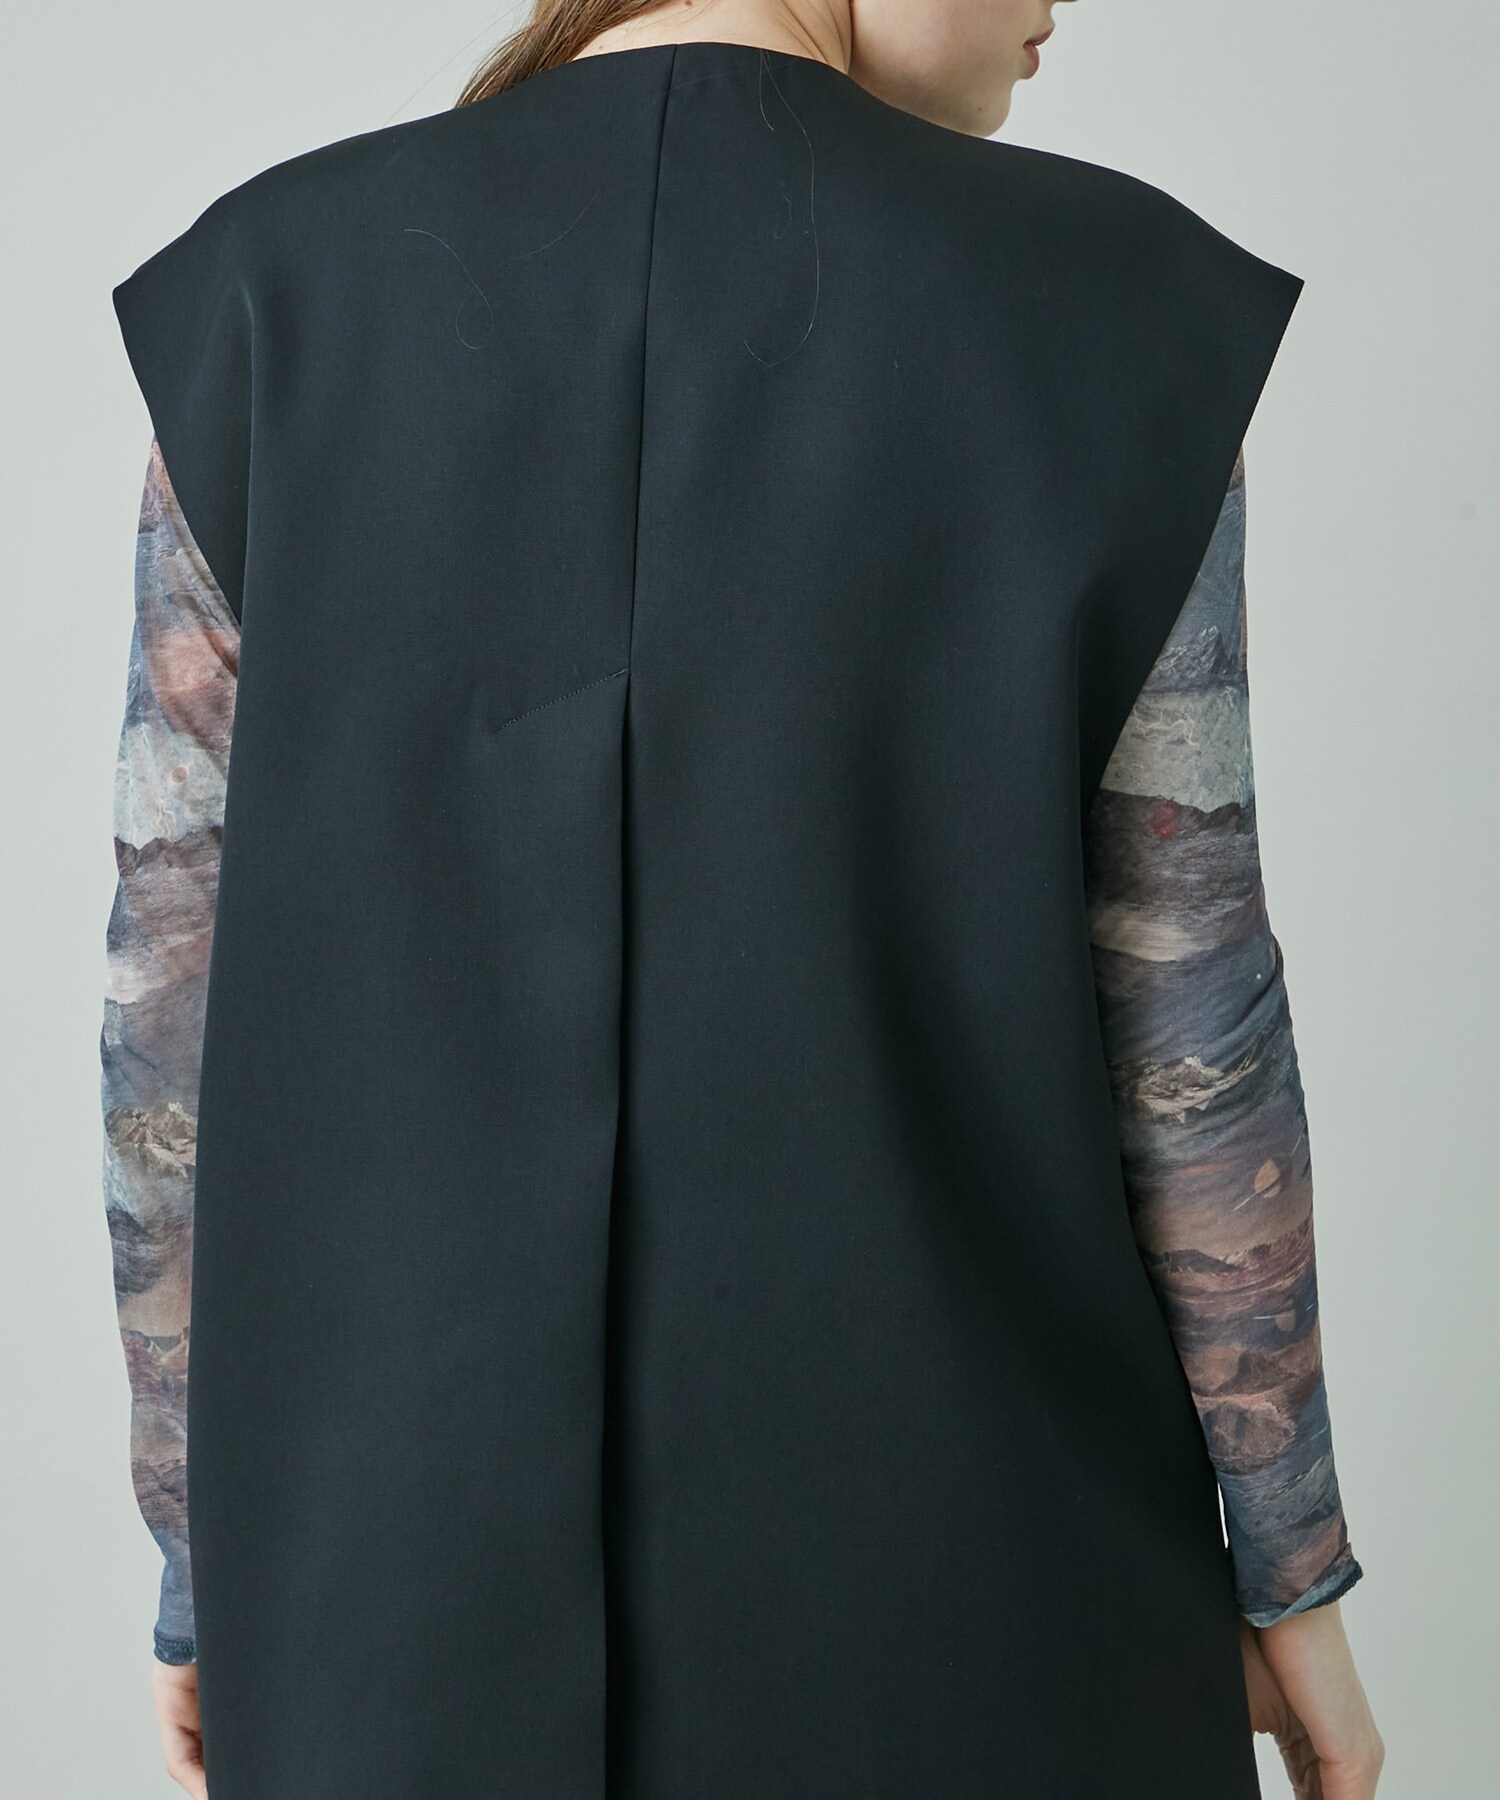 Paper wool sleeveless jacket 08sircus